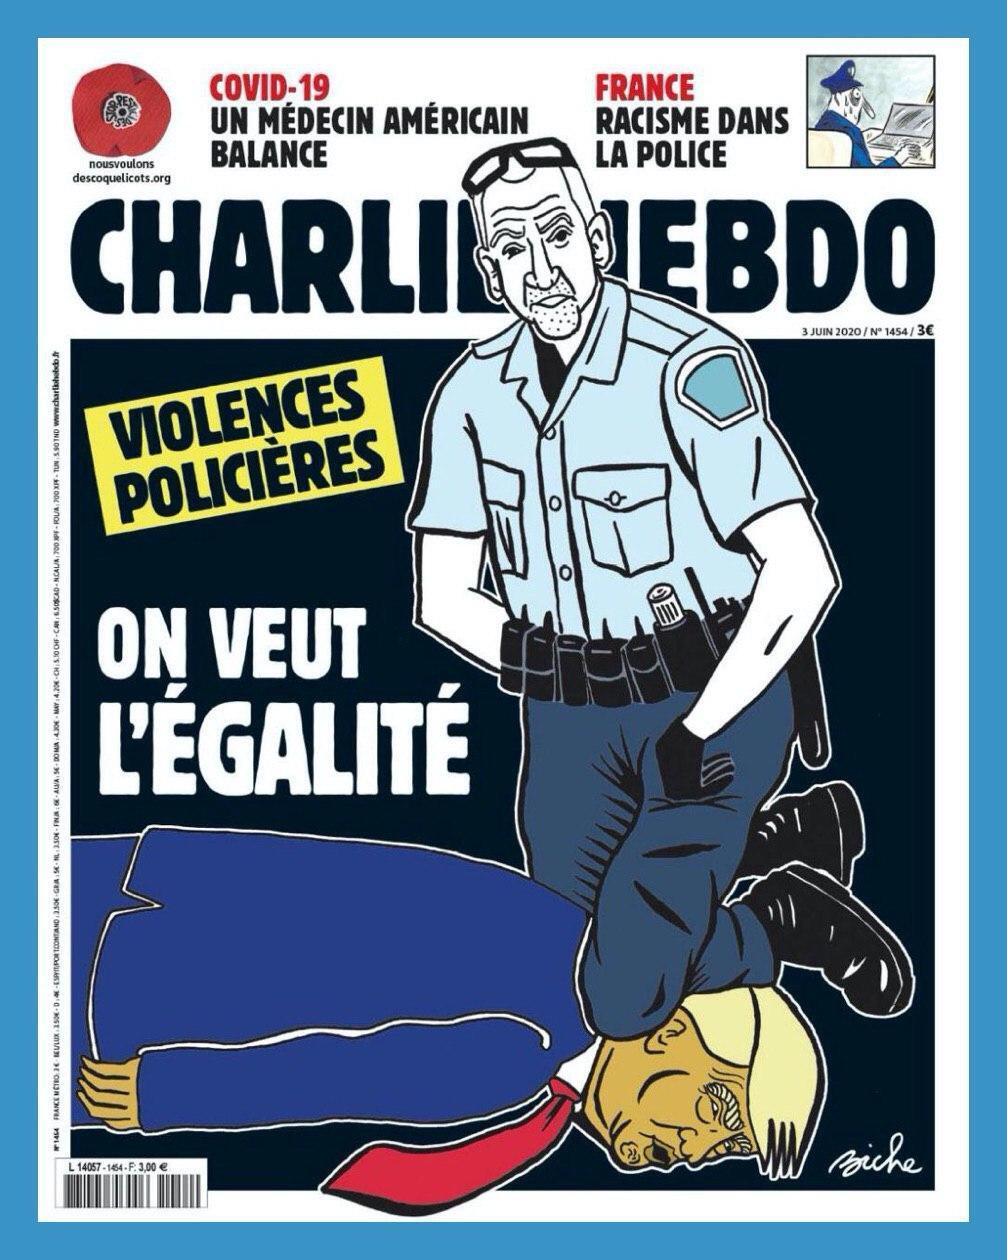 Трампа поместили на обложку скандального журнала Charlie Hebdo